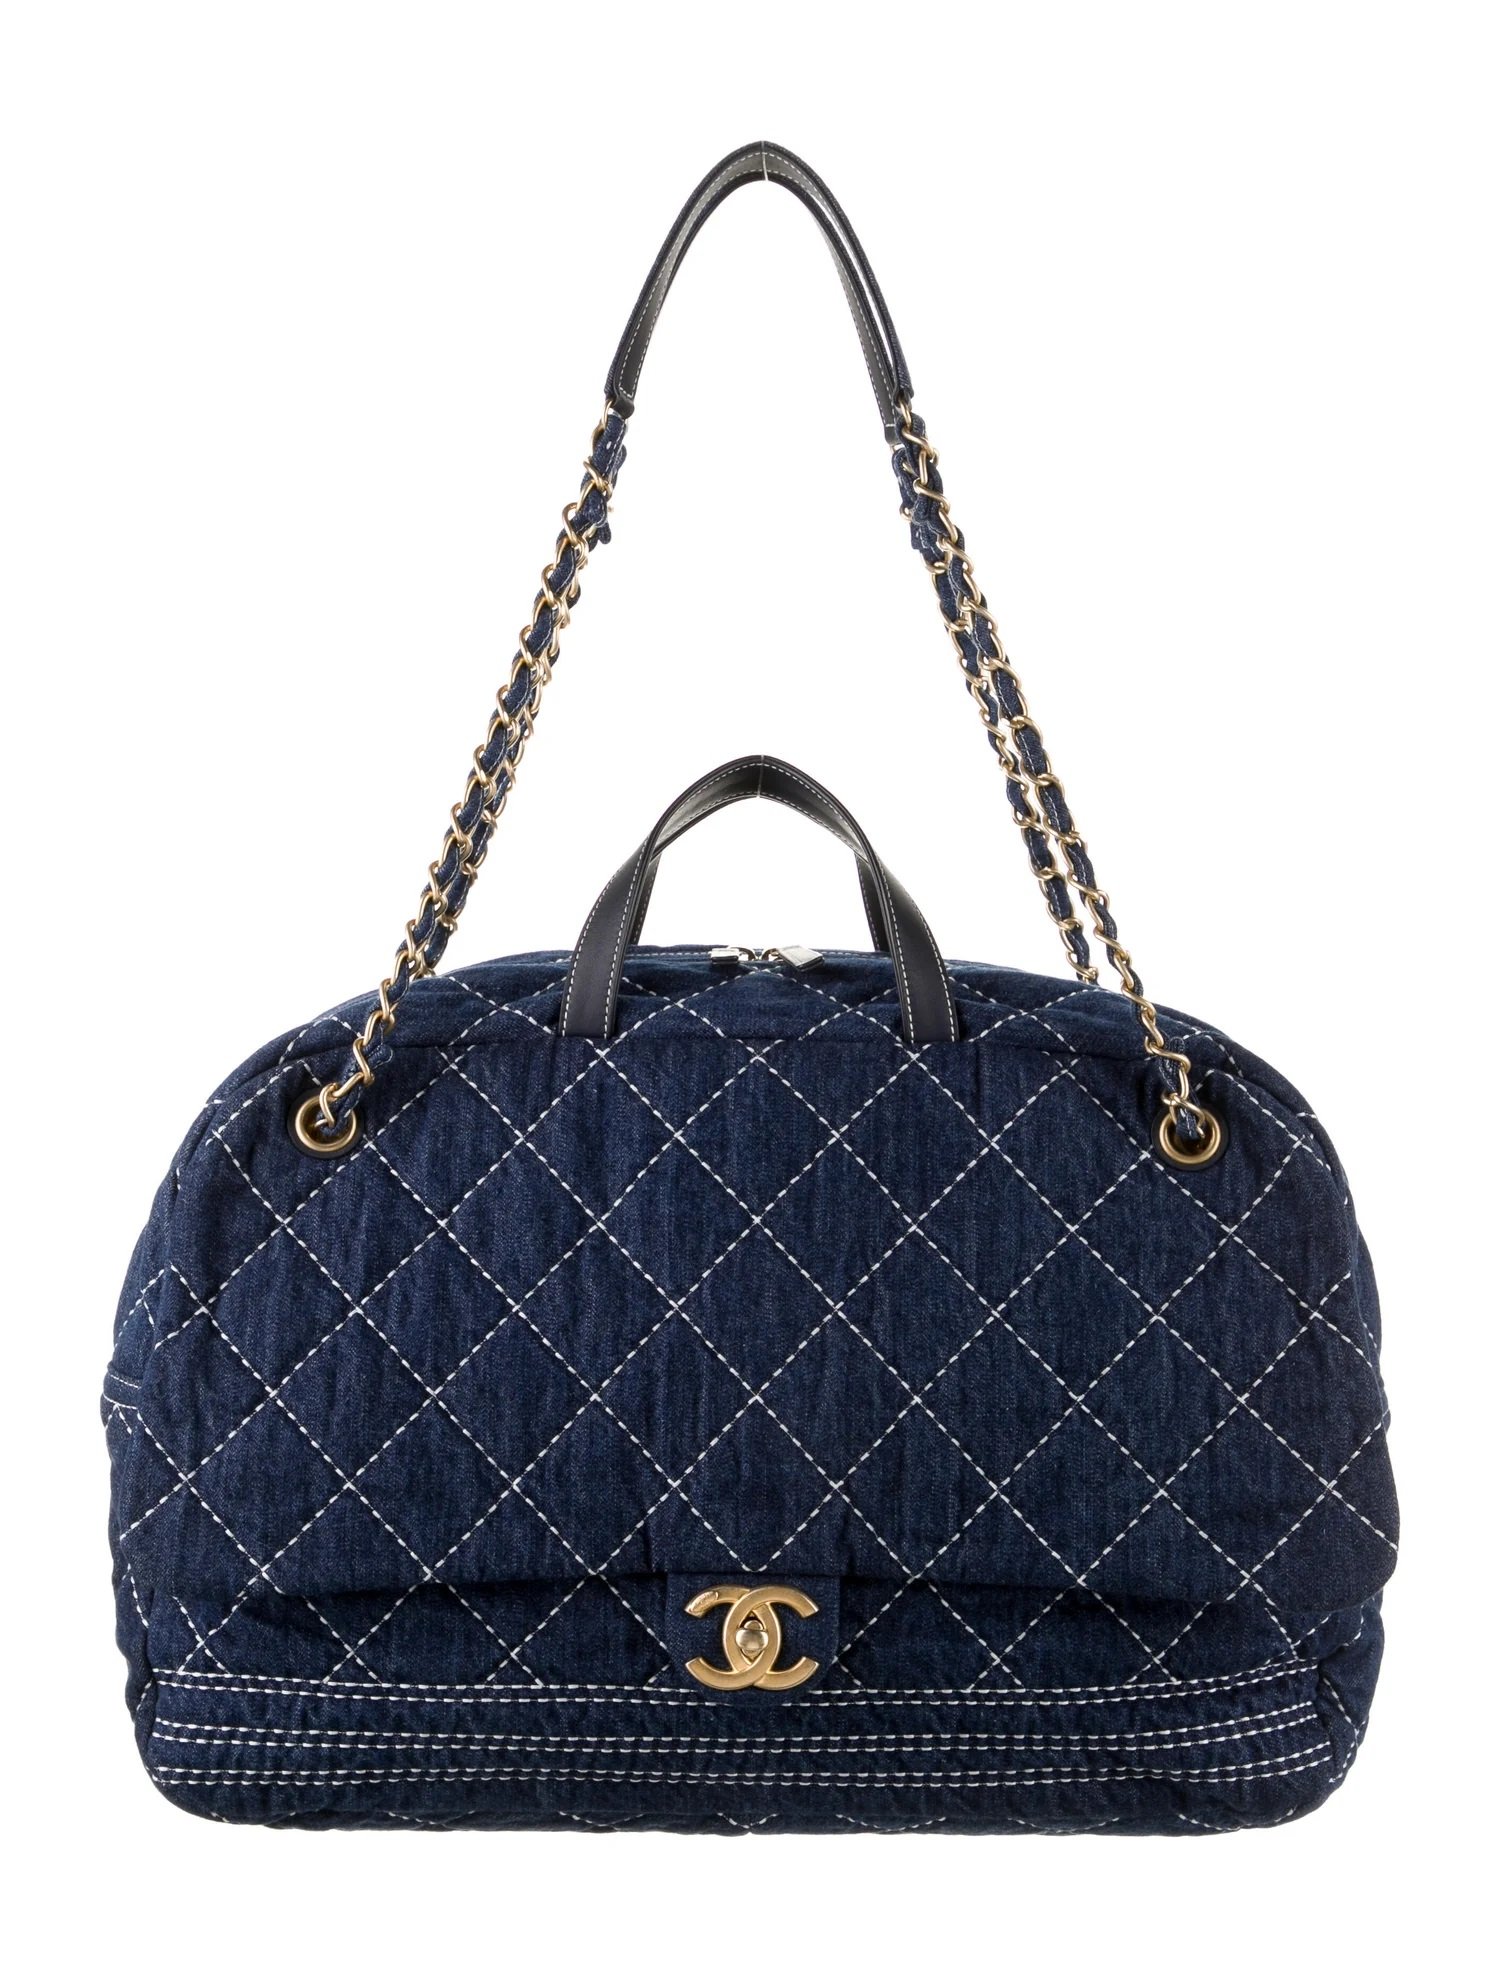 Chanel Trip Express Bowling Bag in Blue Denim.jpg